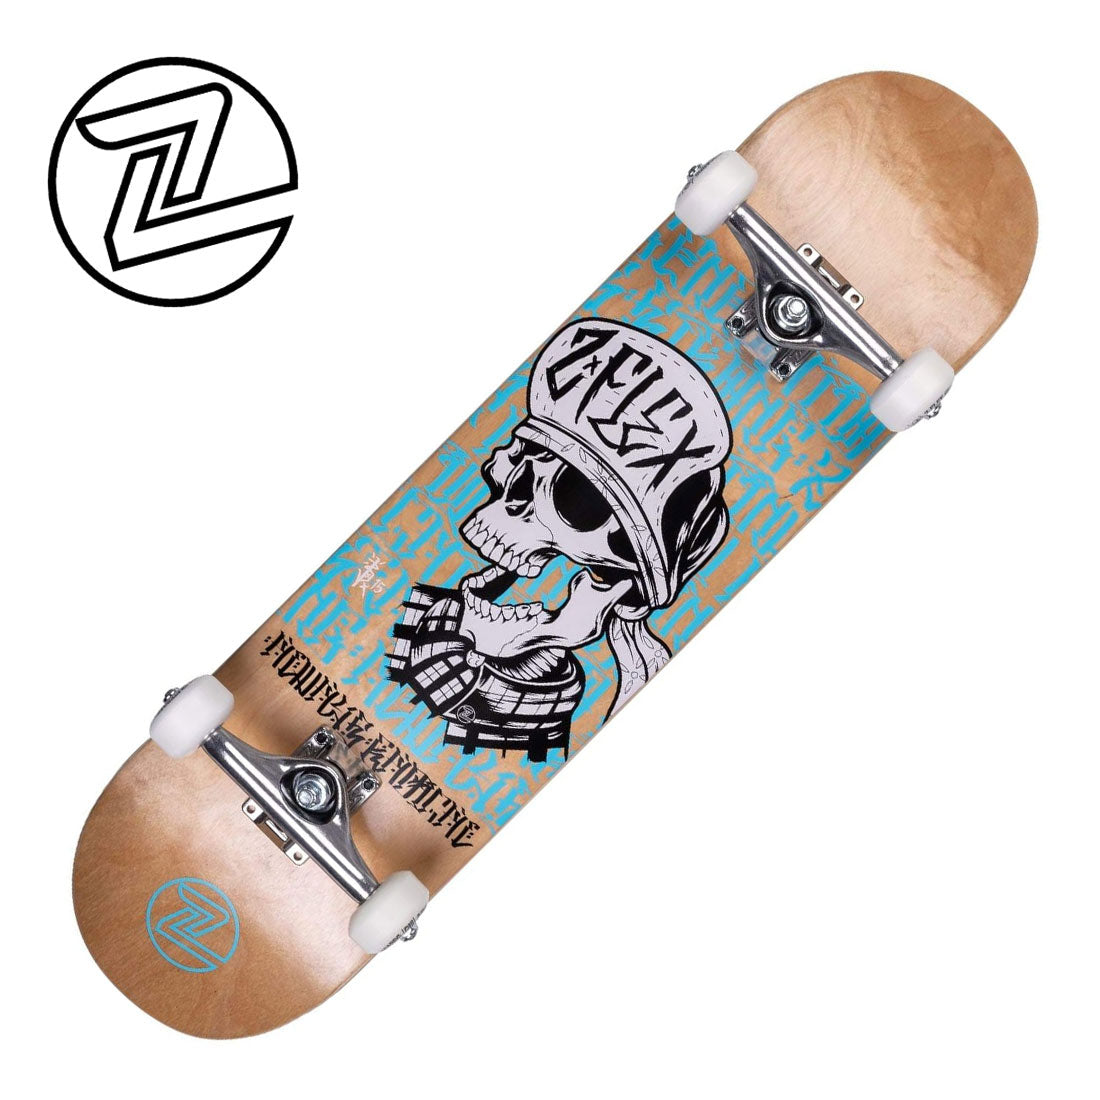 Z-Flex Skull 8.0 Complete Skateboard Completes Modern Street